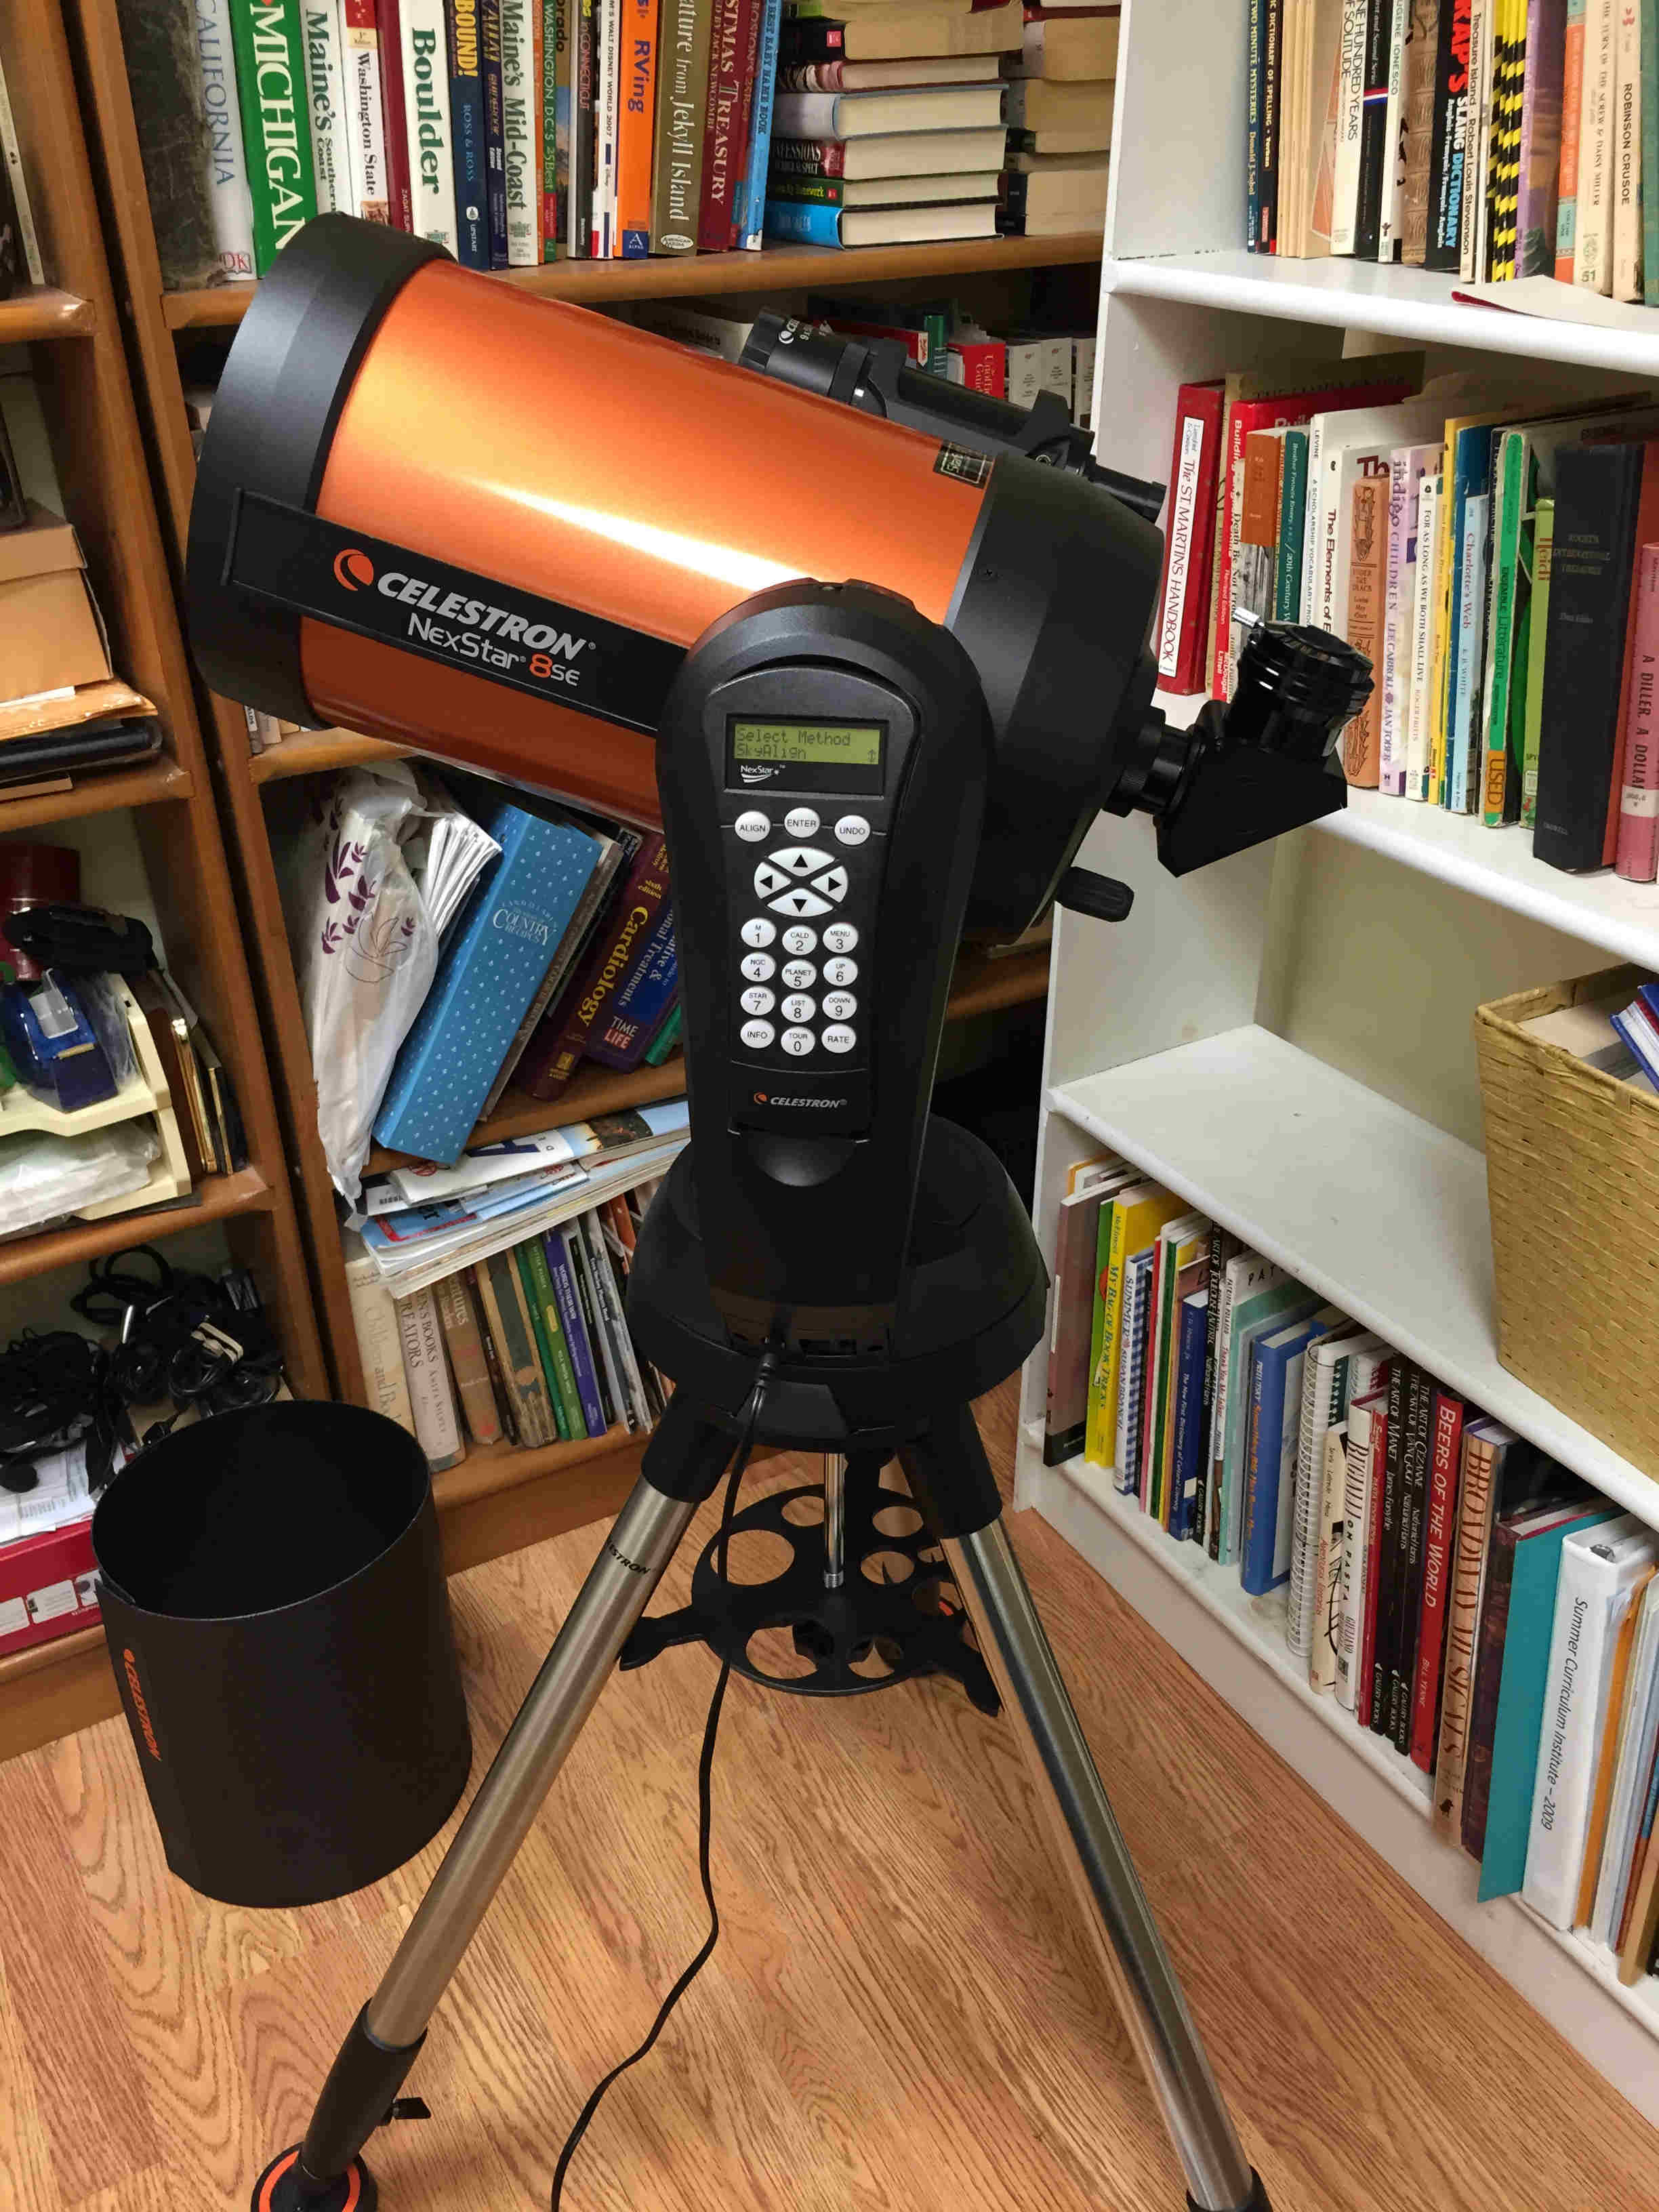 used telescopes for sale near me